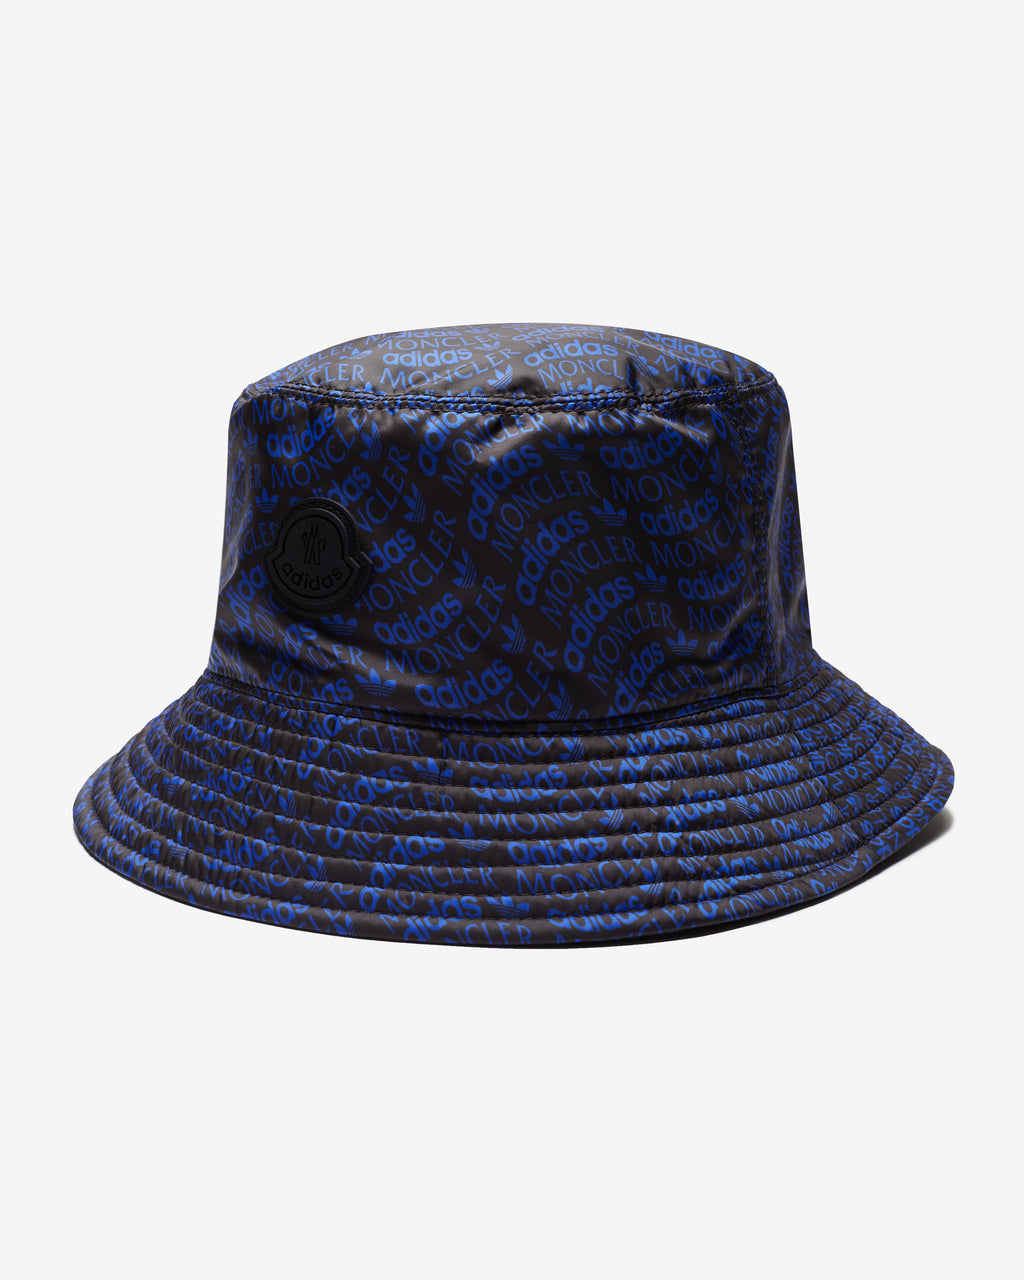 MONCLER X ADIDAS ORIGINALS BUCKET HAT - BLACK/ BLUE